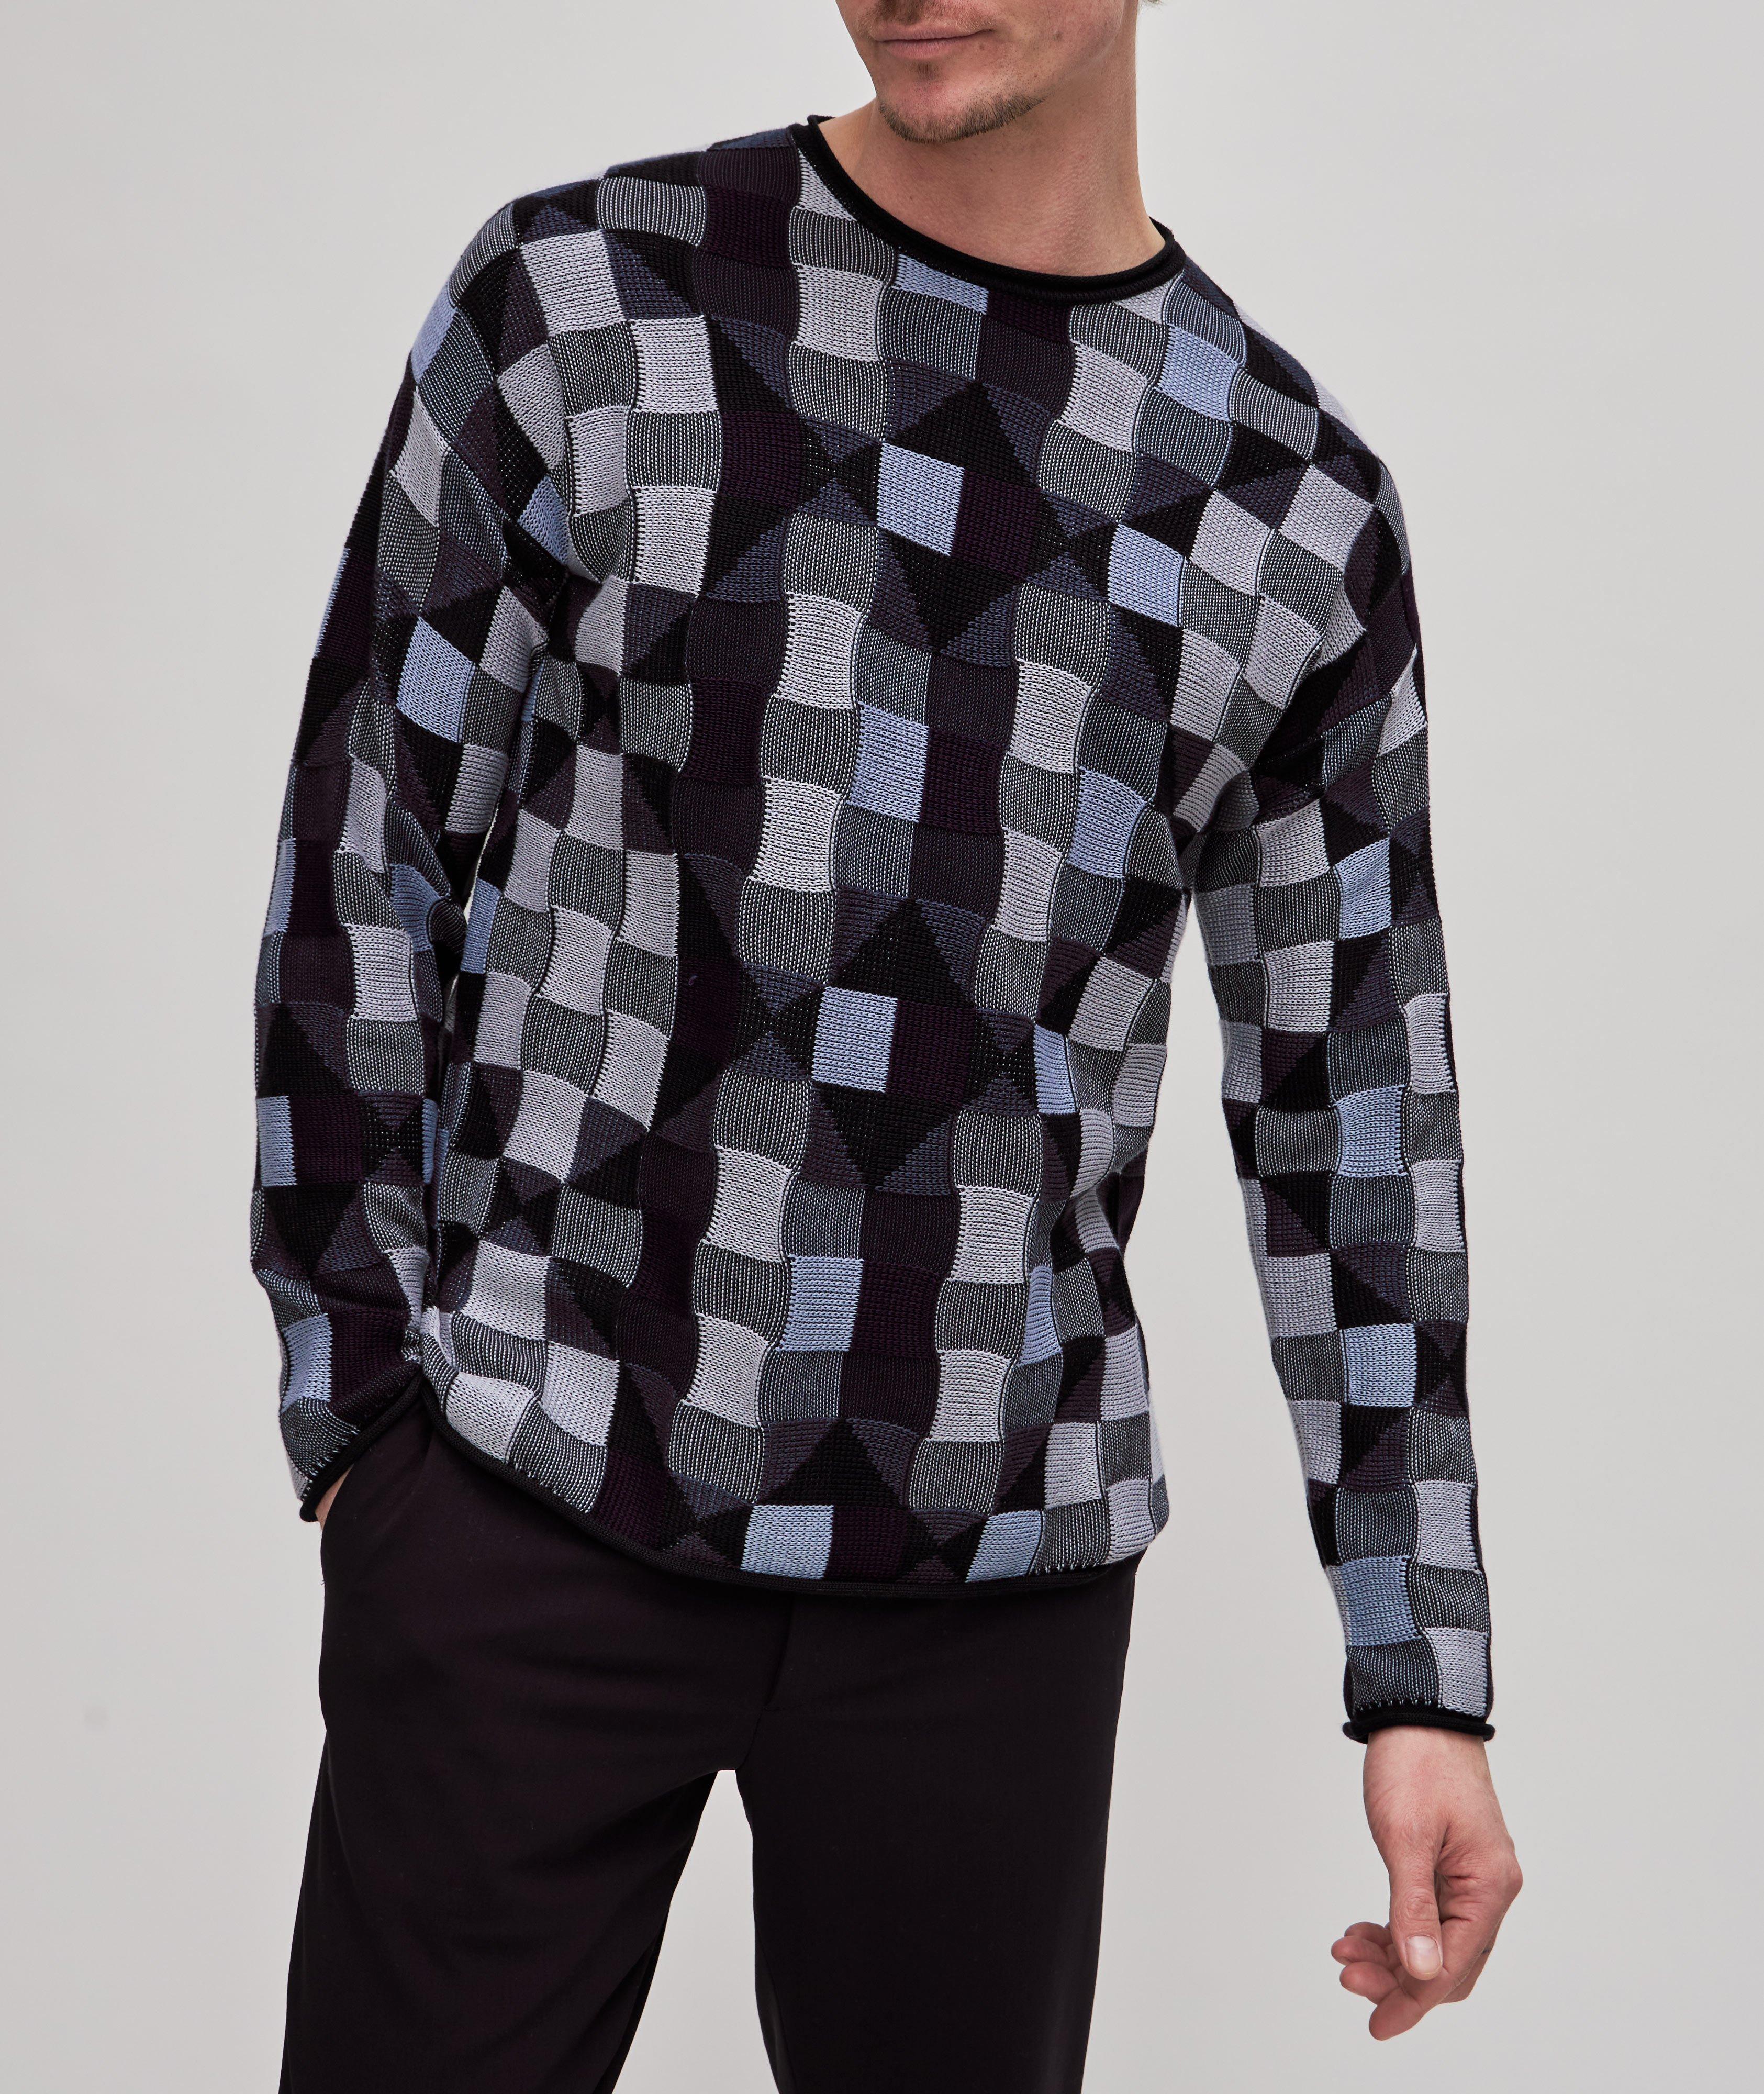 Retro Basket checker Jacquard Print Sweater image 2